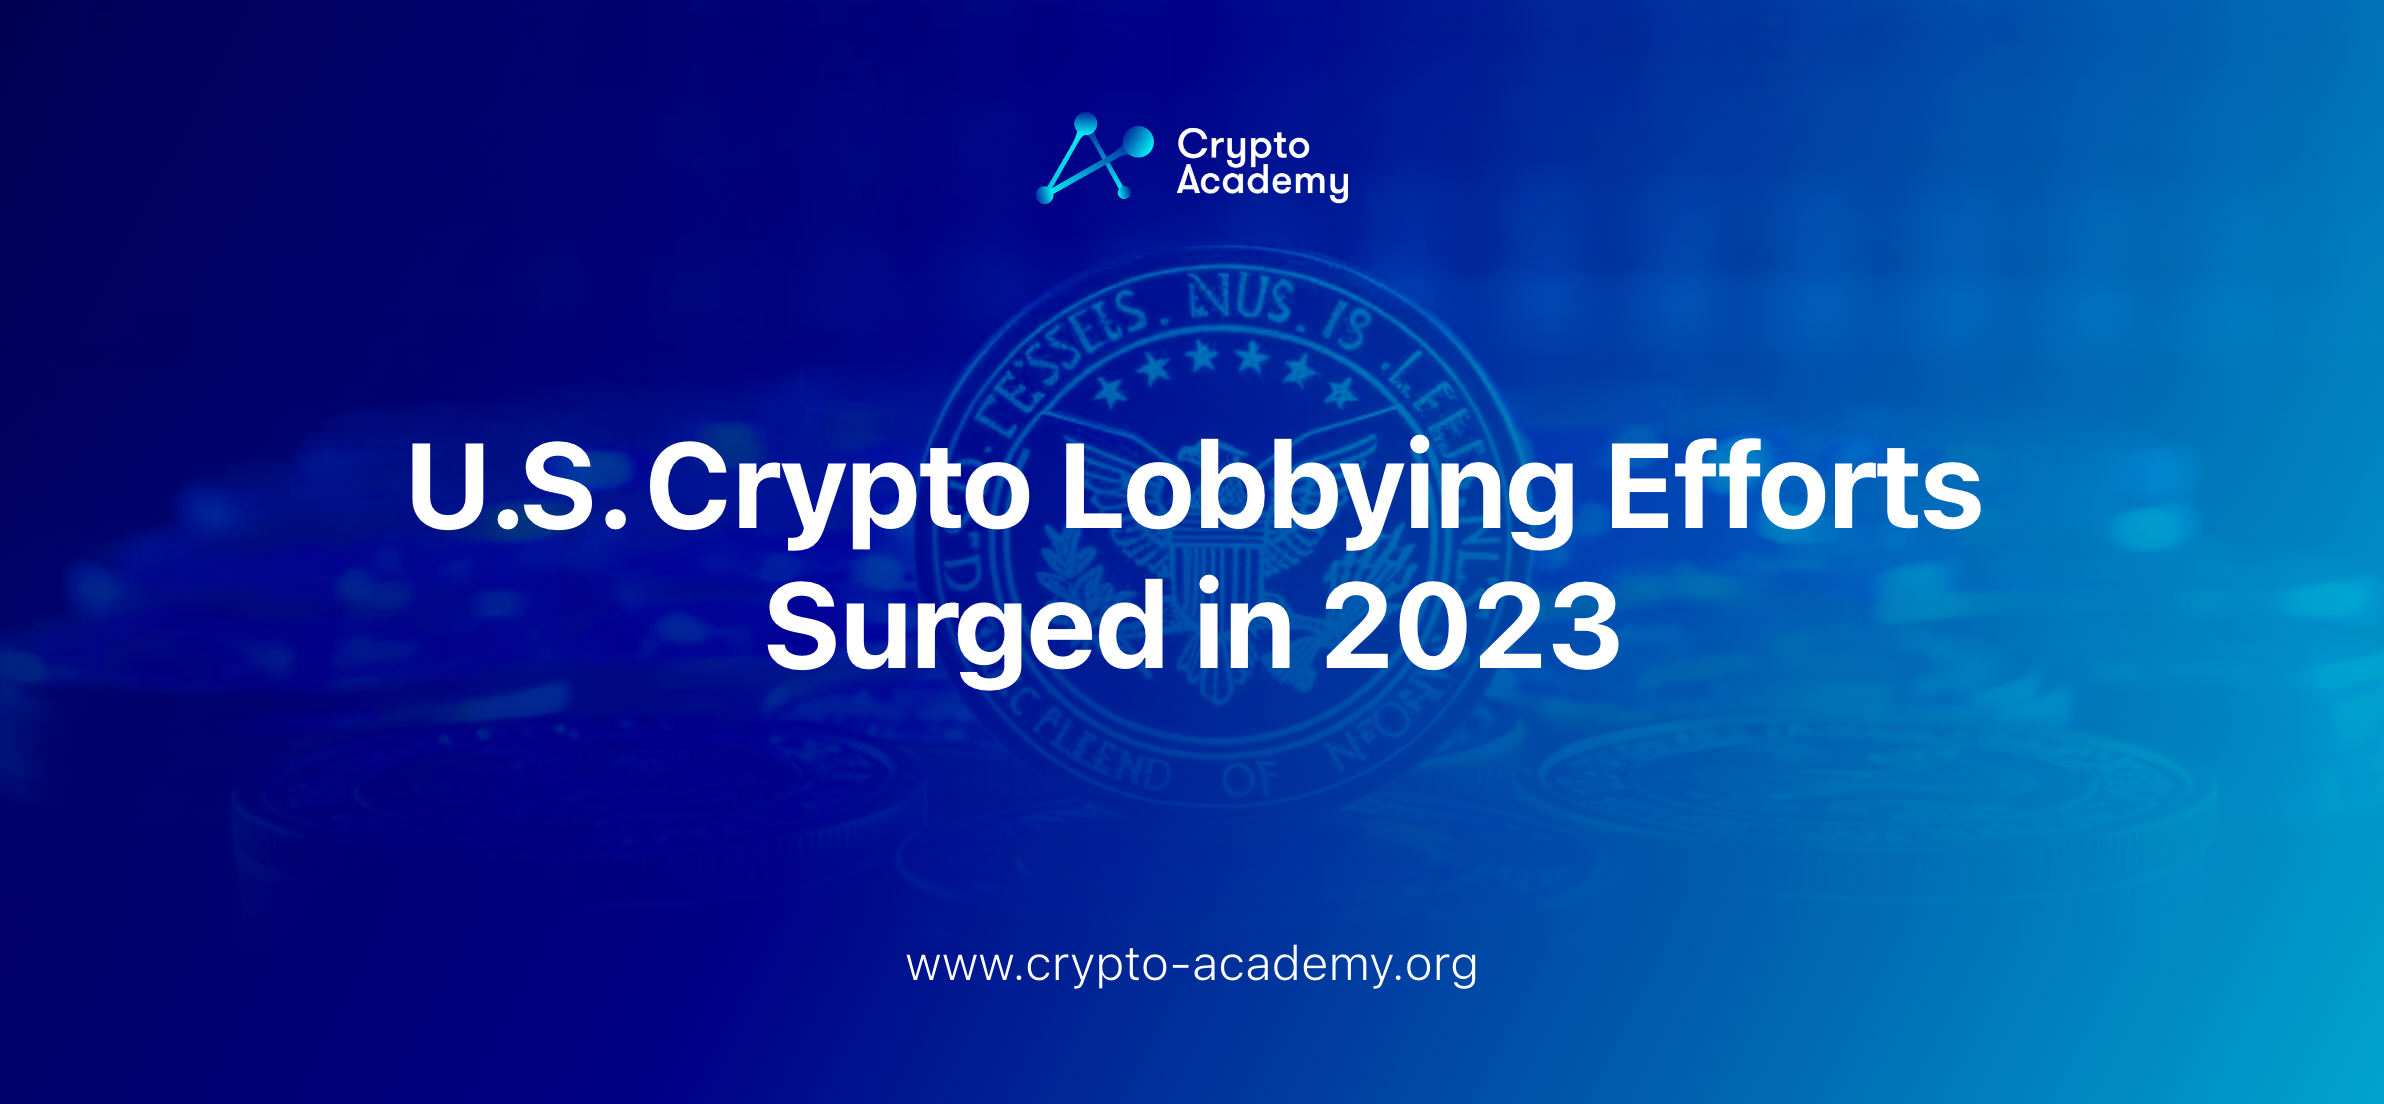 U.S. Crypto Lobbying Efforts Surged in 2023